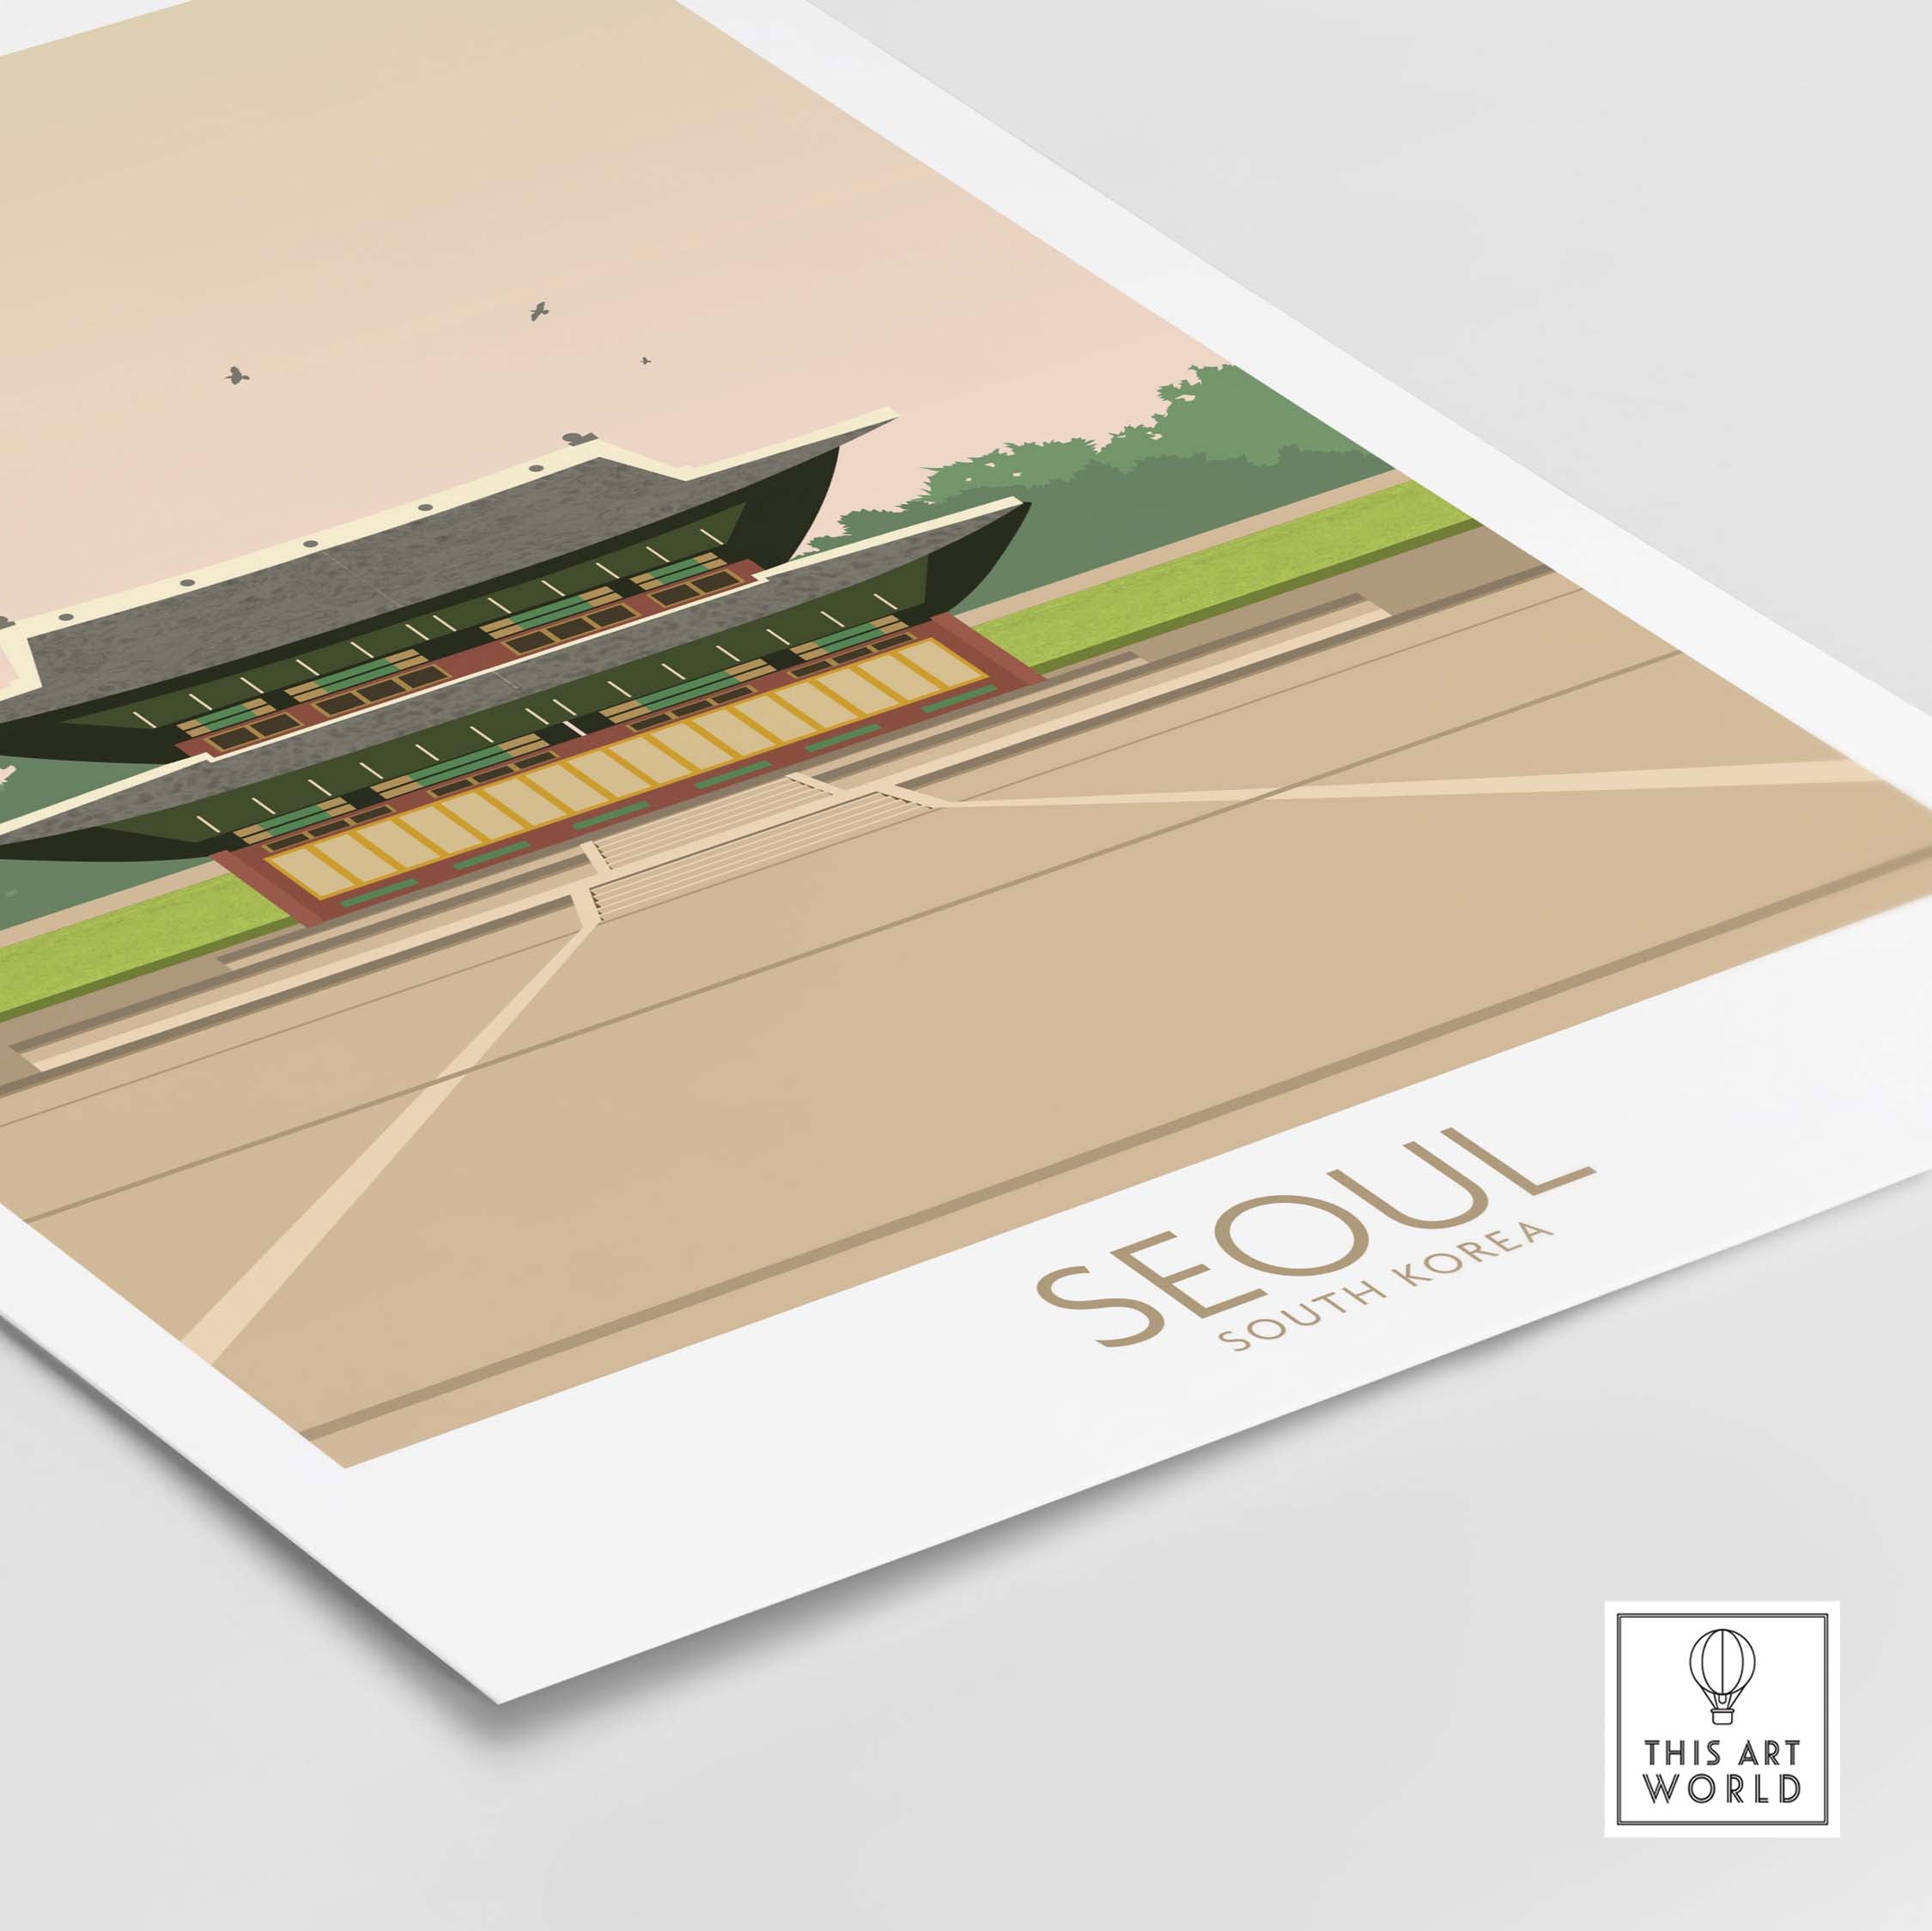 seoul print south korea travel poster